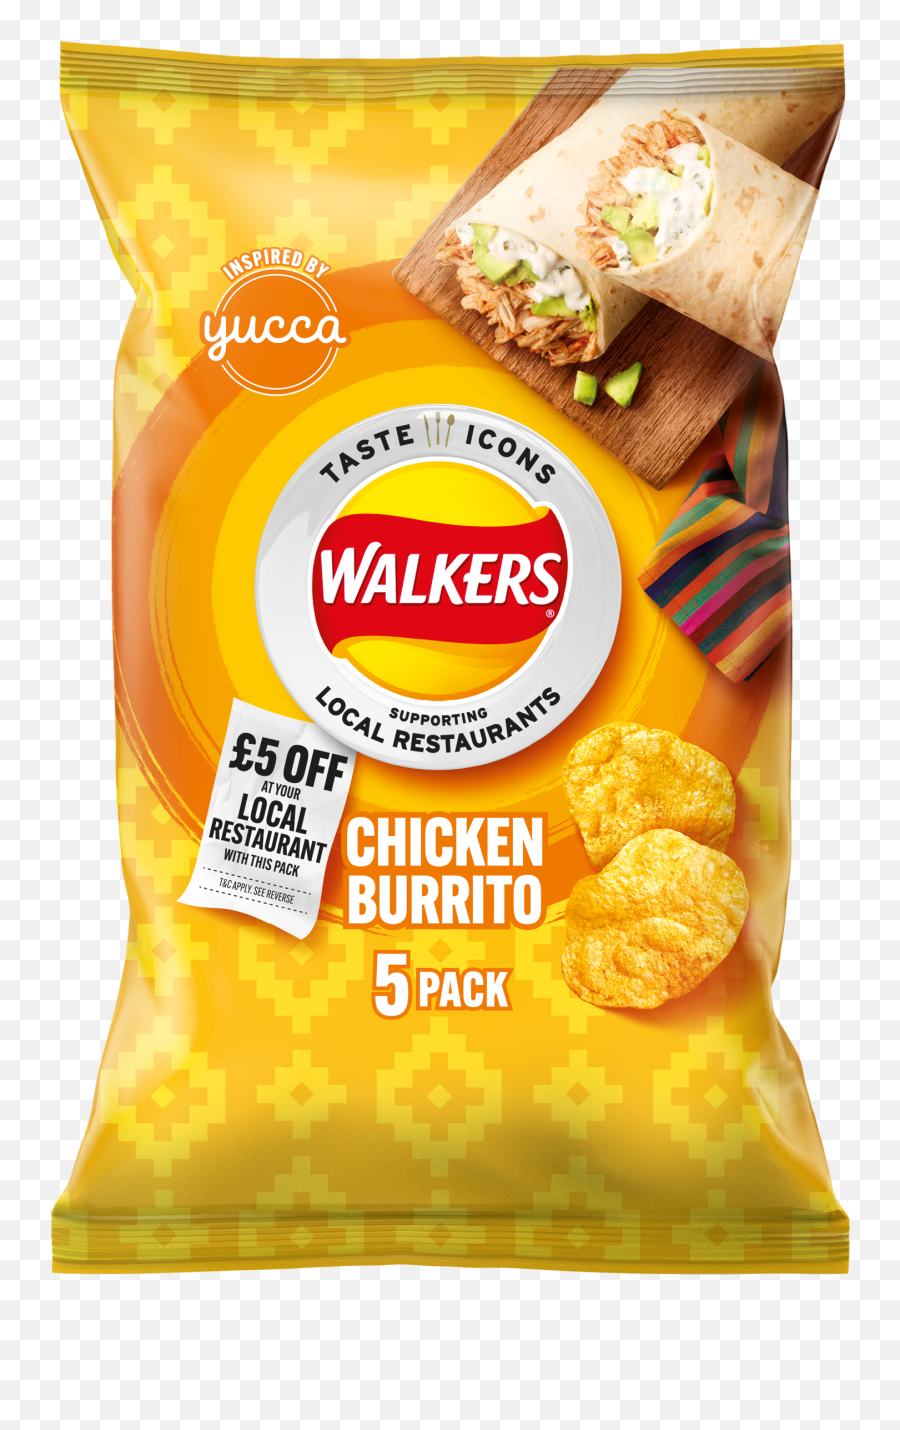 And Walkers Launch U0027 Emoji,Chili Emoji Twitter